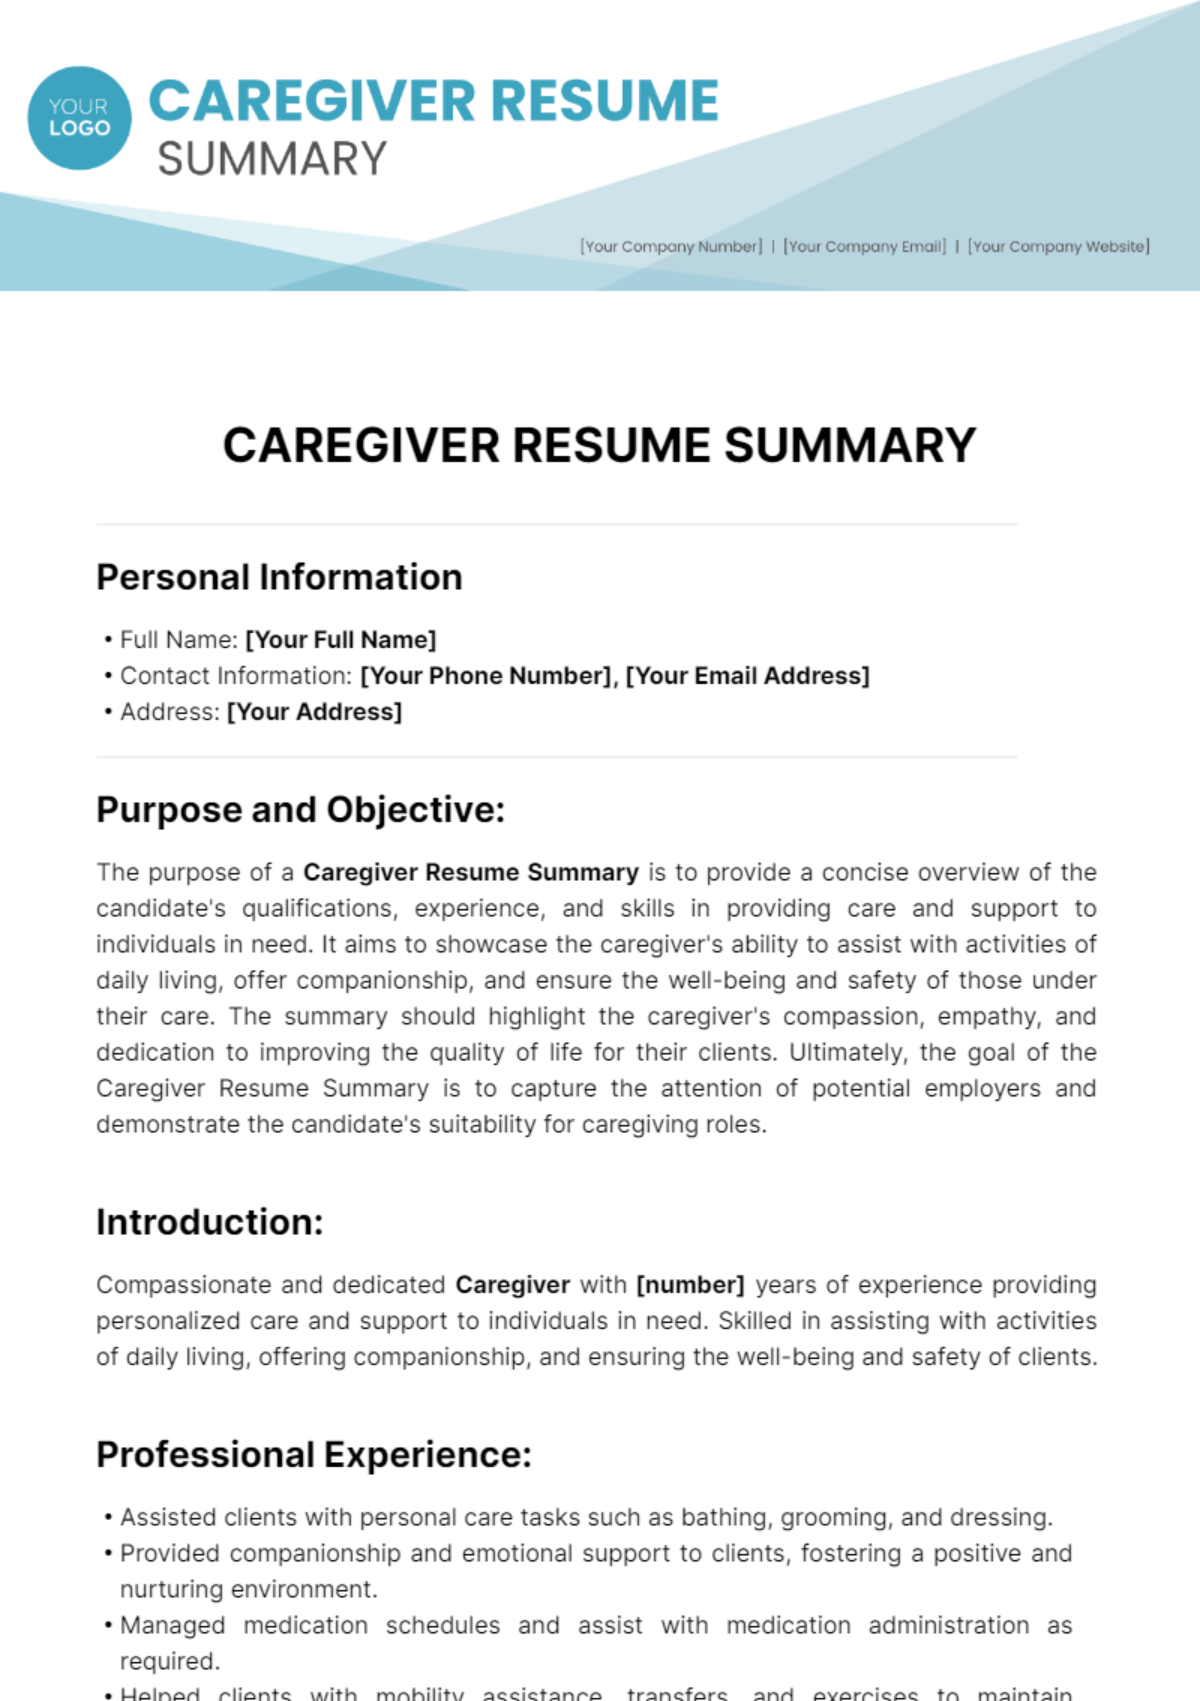 Caregiver Resume Summary Template